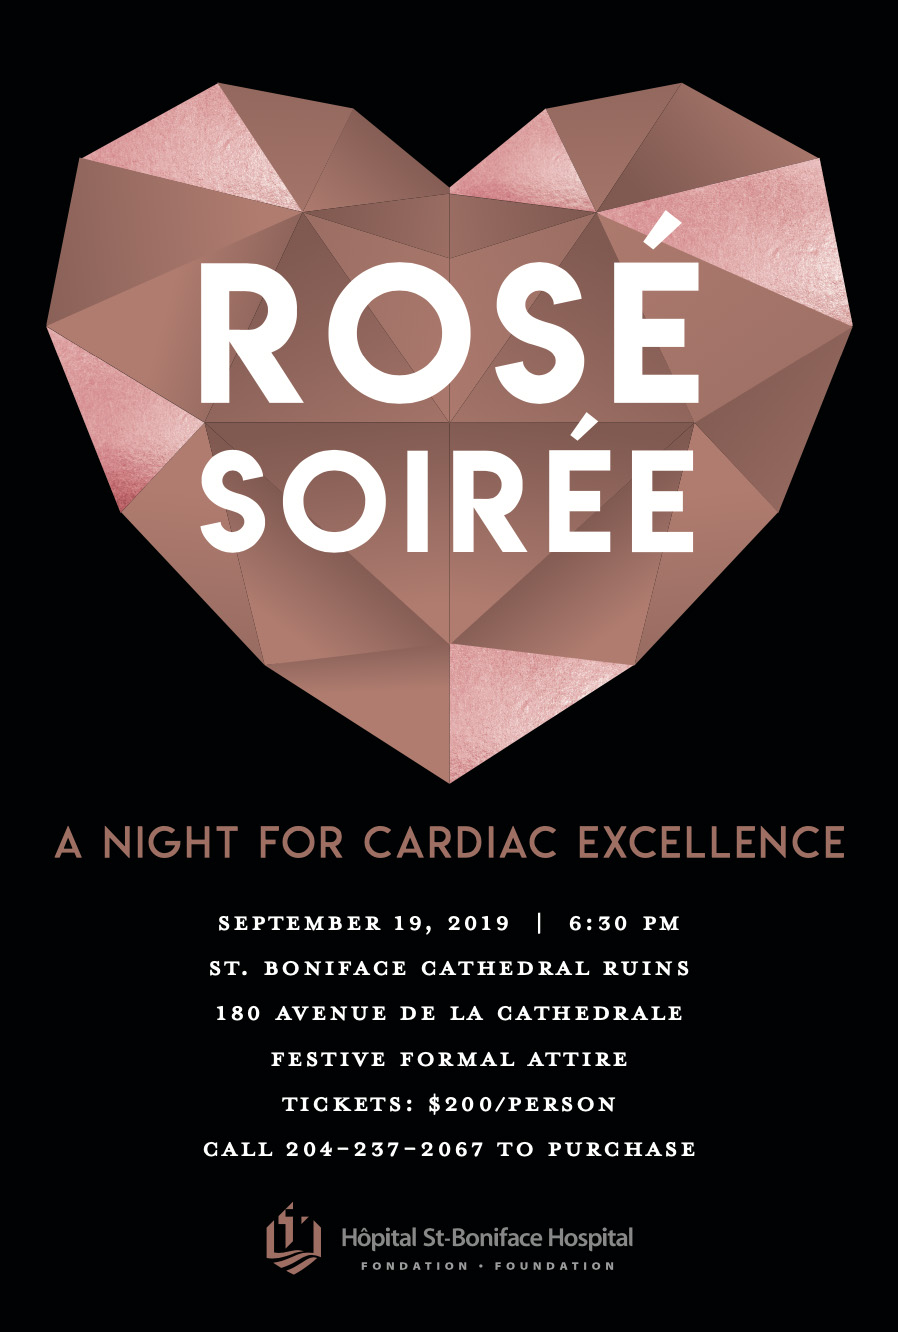 Rosé Soirée heart logo with event invite information